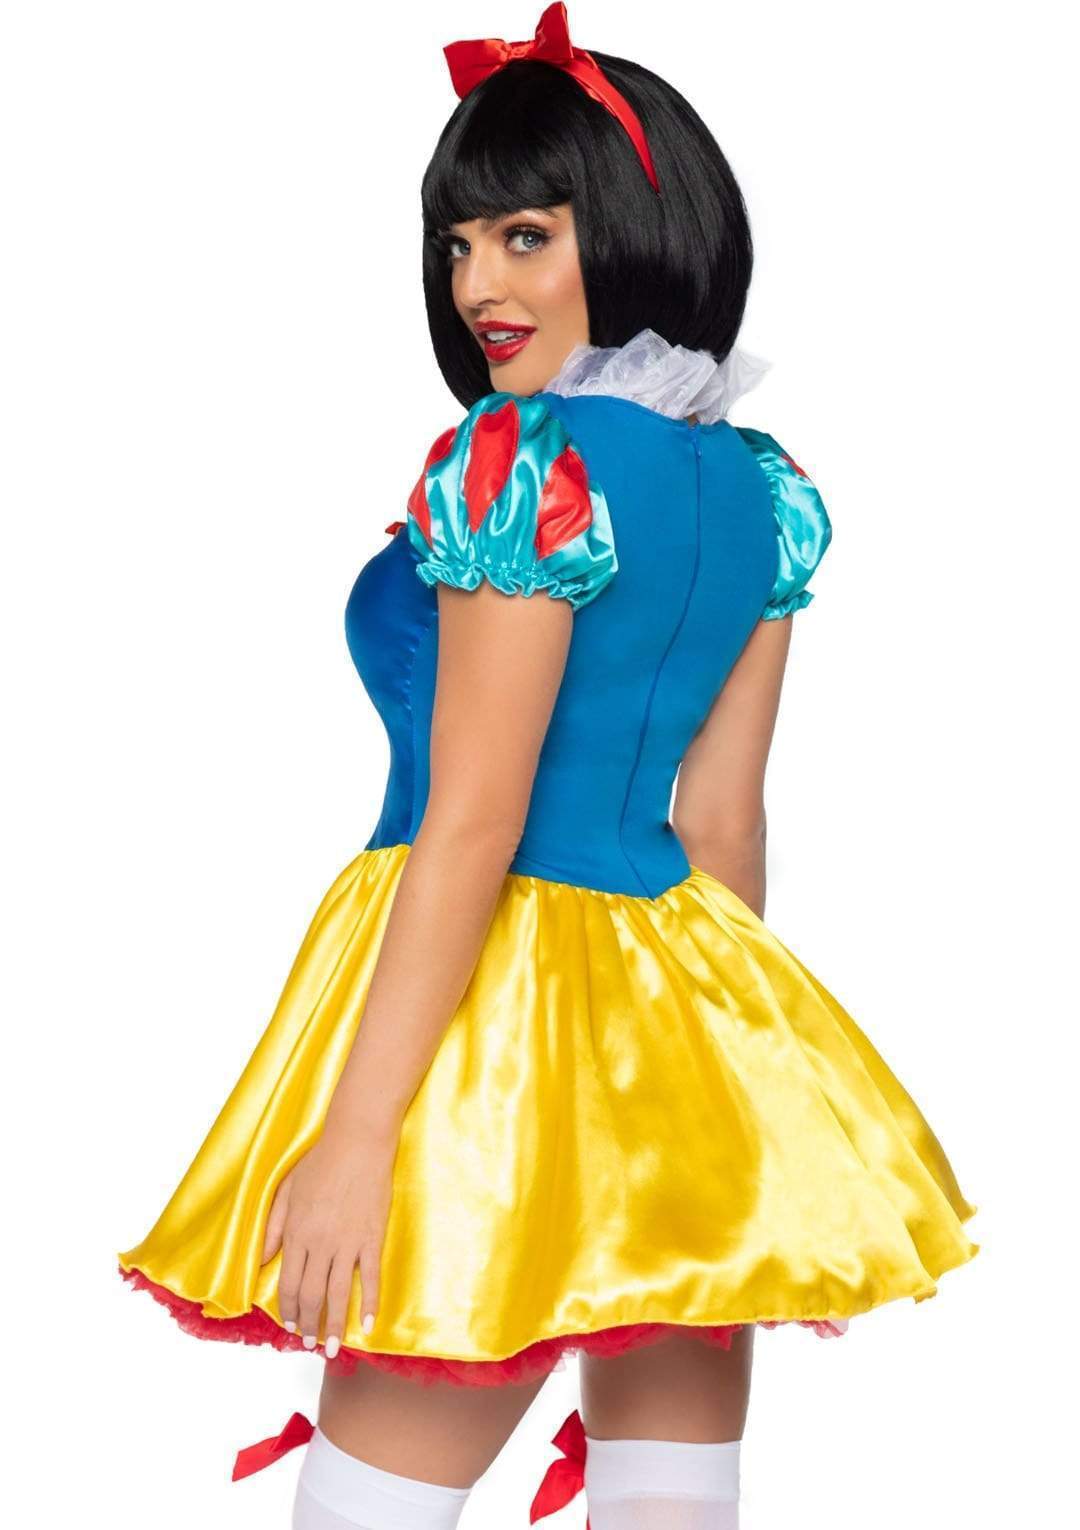 Snow White Costume, Women's Fairytale Costume